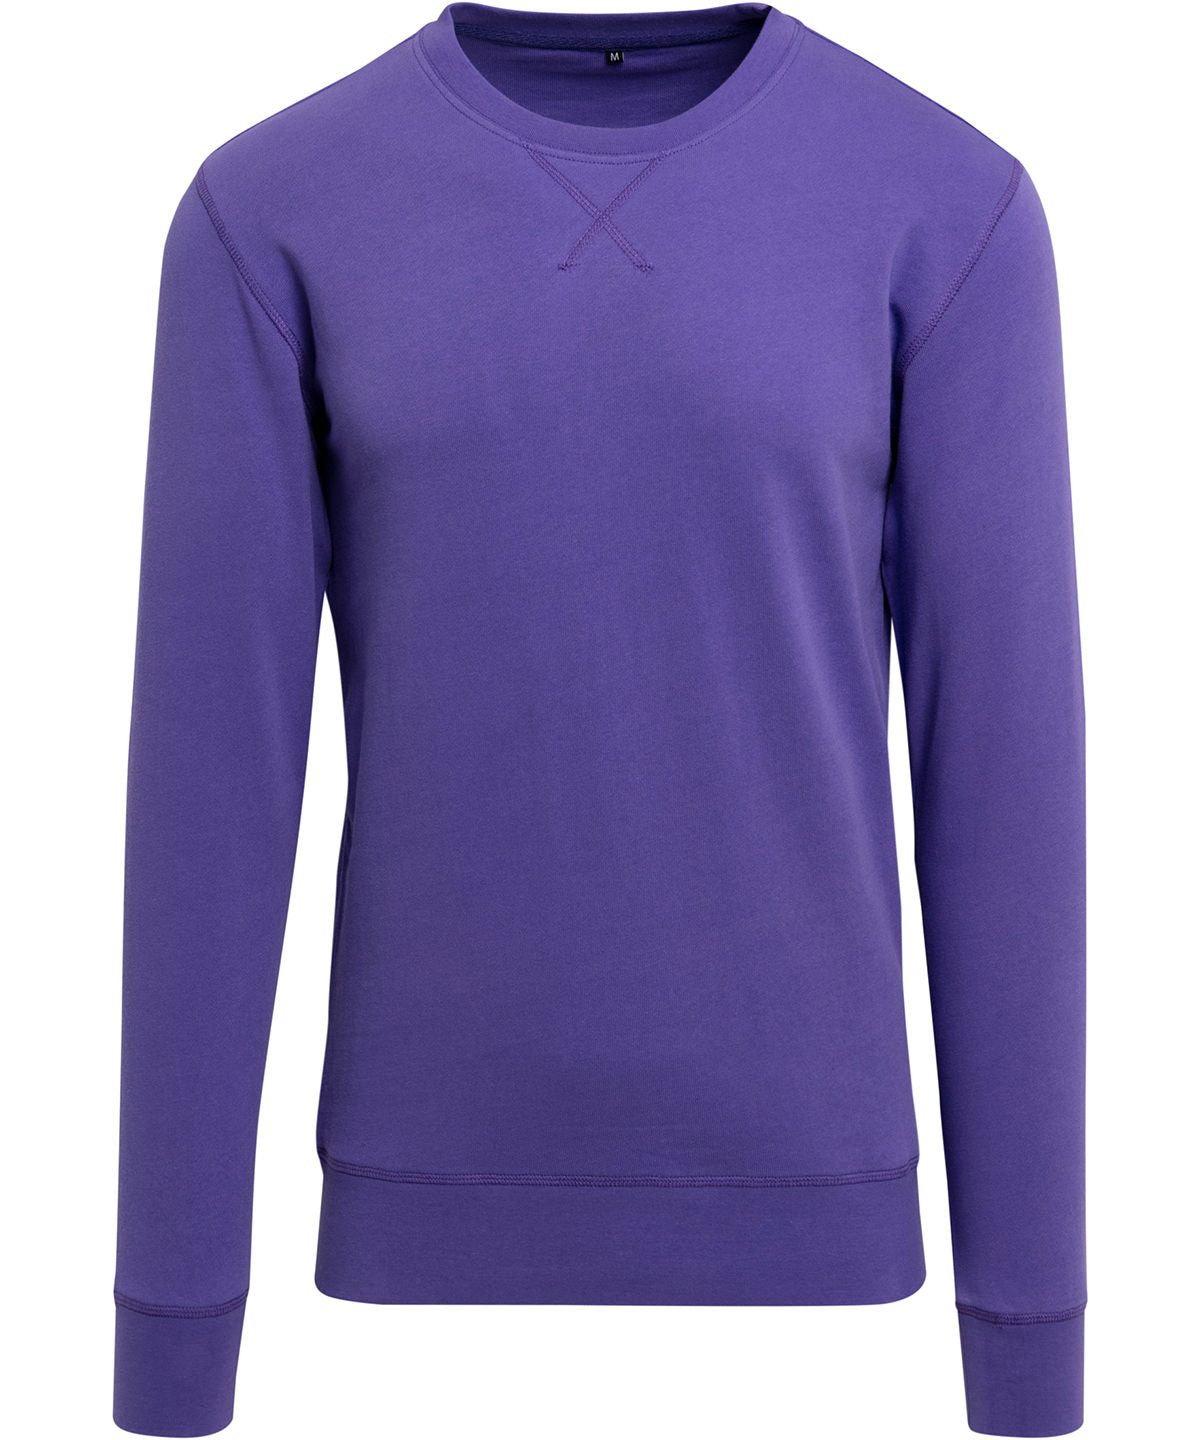 Personalised Sweatshirts - Dark Grey Build Your Brand Light crew sweatshirt